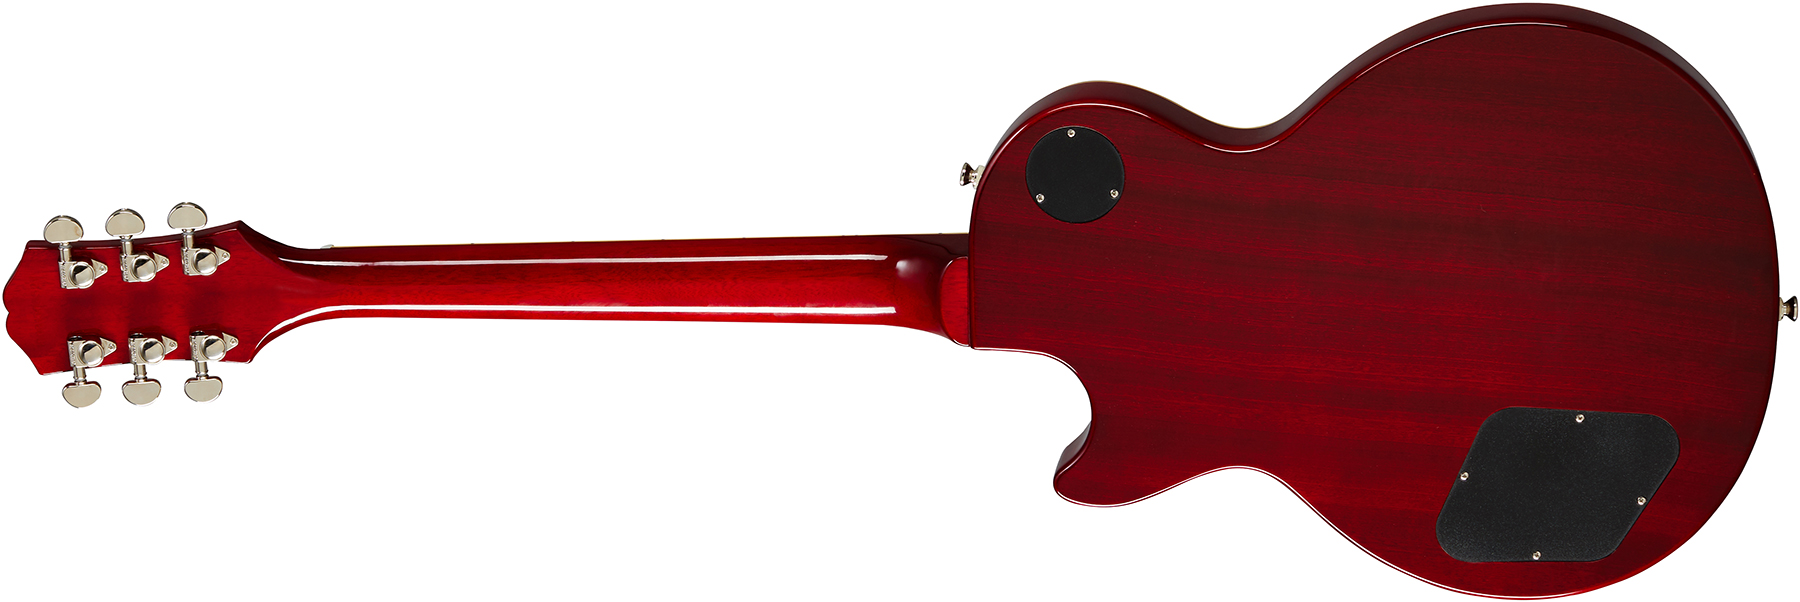 Epiphone Les Paul Standard 60s 2h Ht Rw - Iced Tea - Single-Cut-E-Gitarre - Variation 1